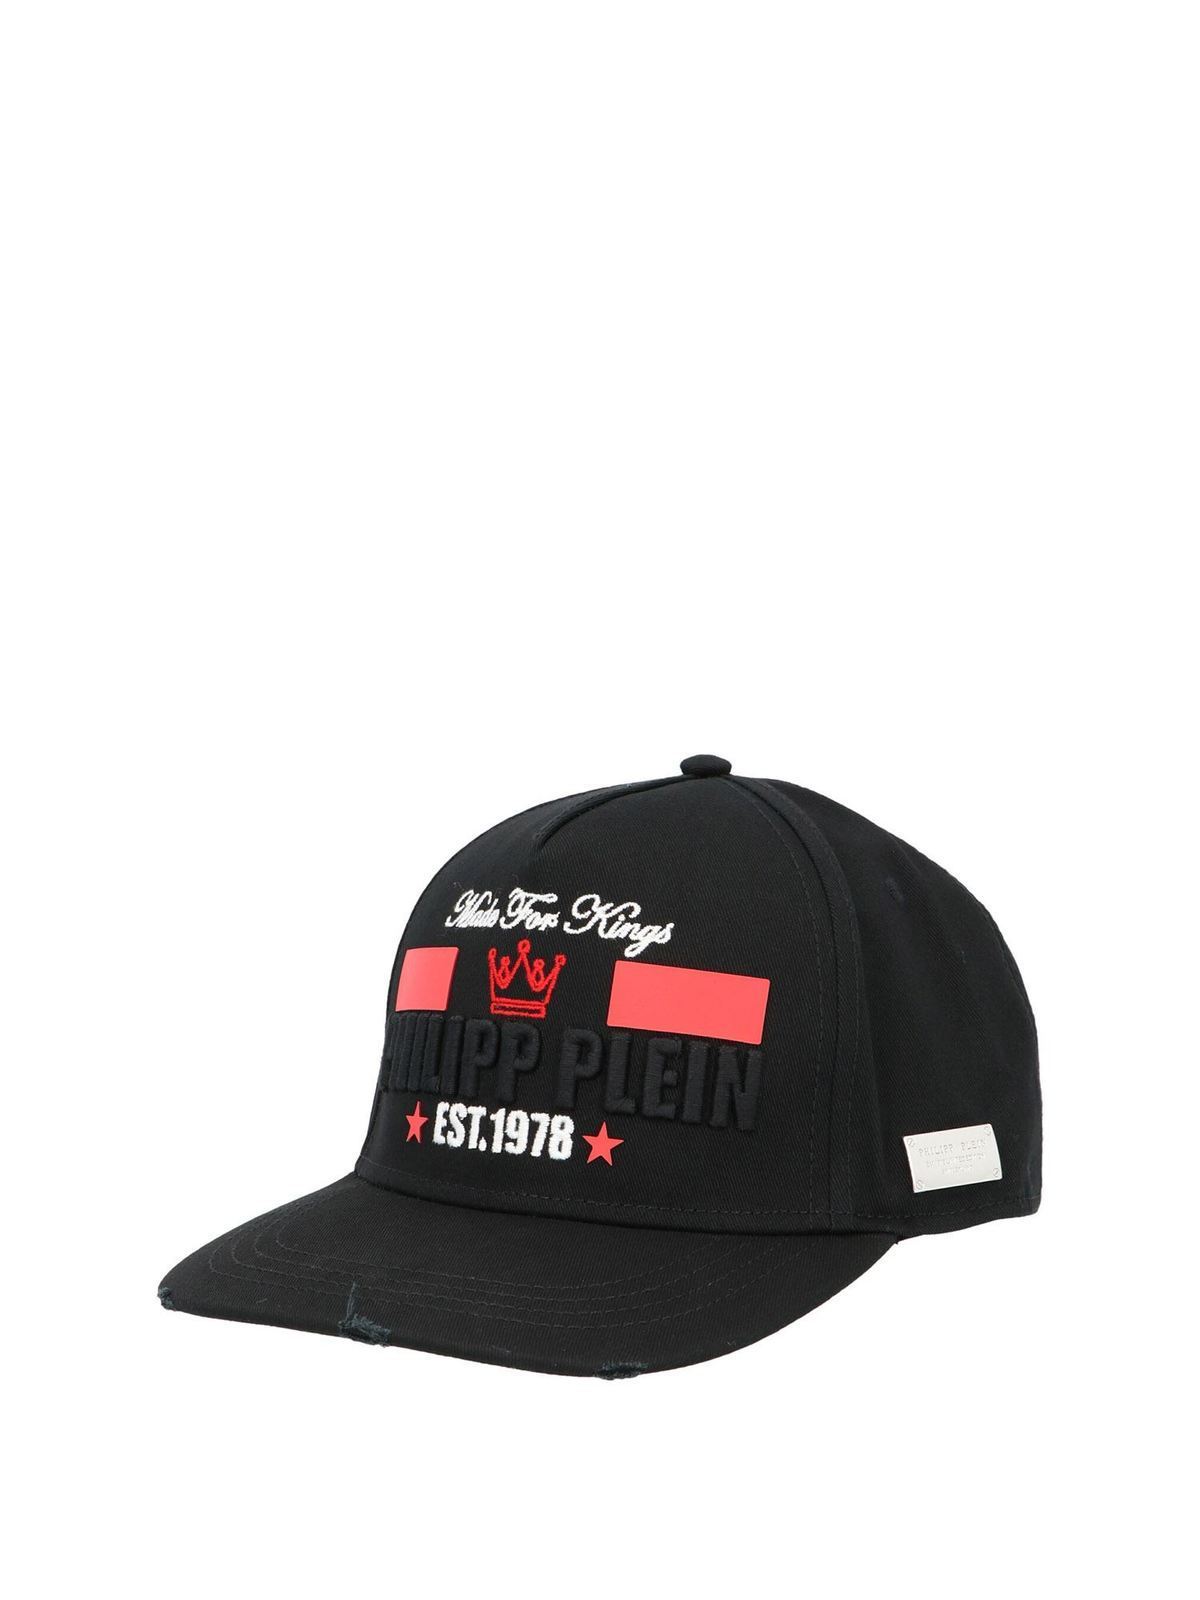 cabine Schuldig Kapel Hats & caps Philipp Plein - King Plein basaball cap in black and red -  UAC0045PTE003N0213